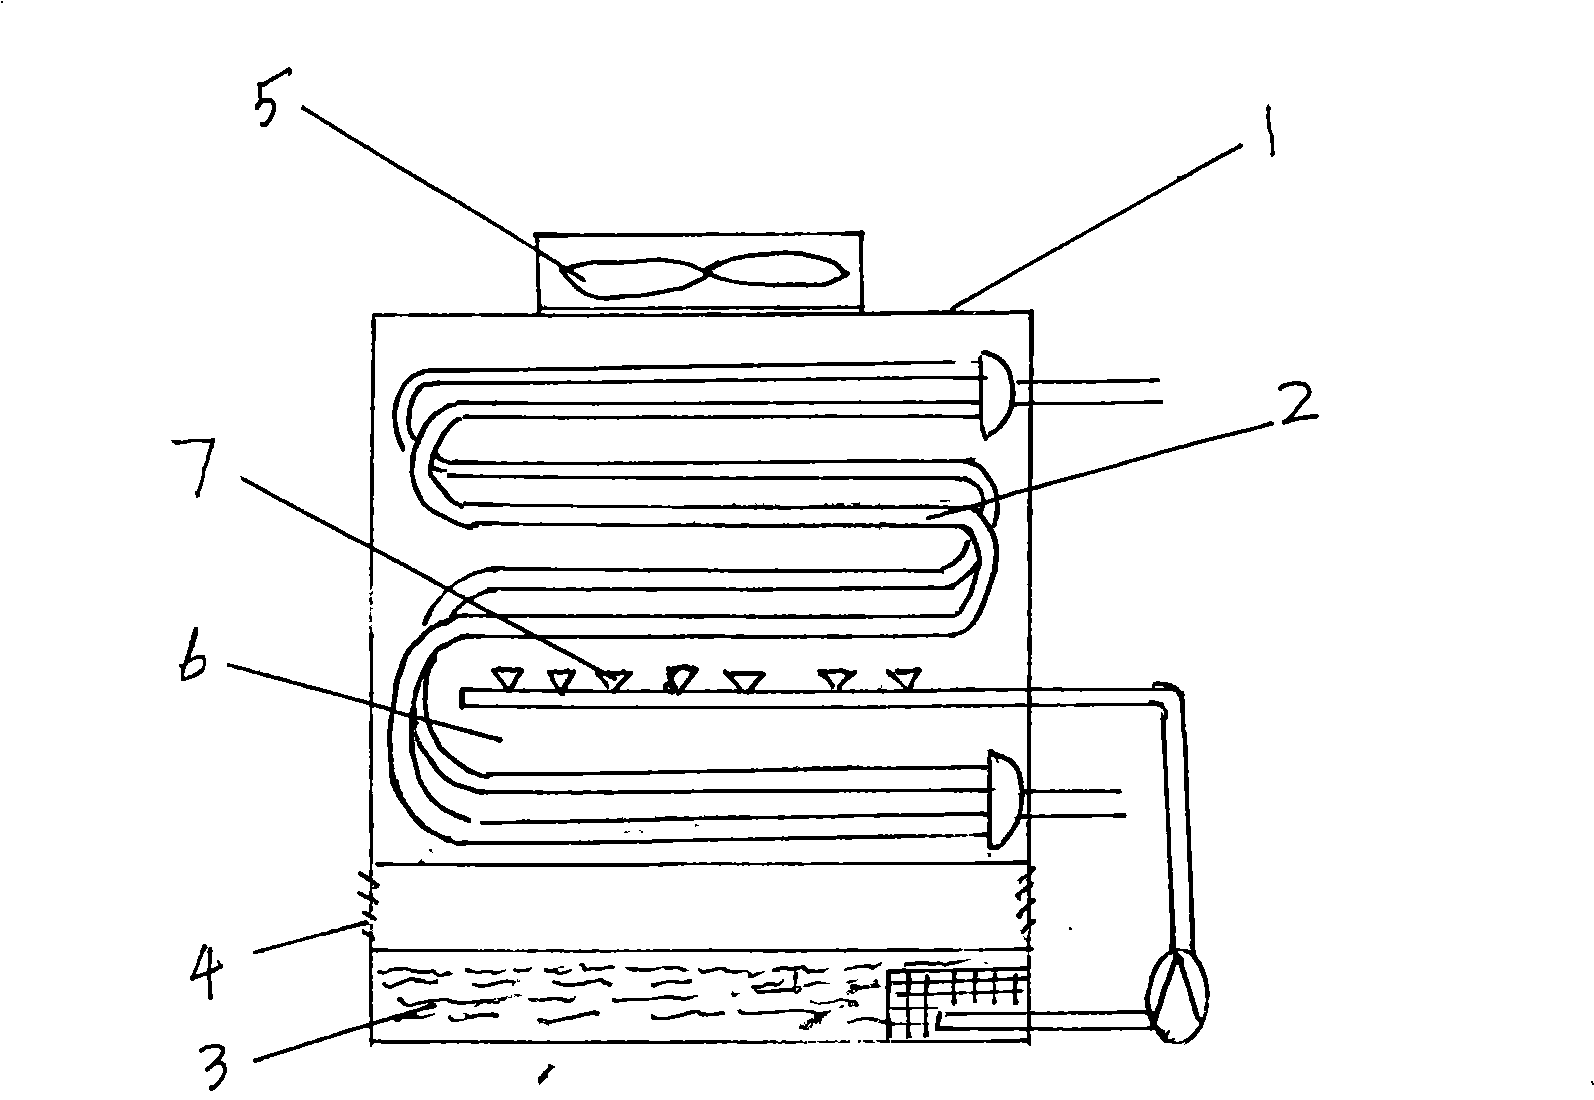 Evaporation type heat exchanger